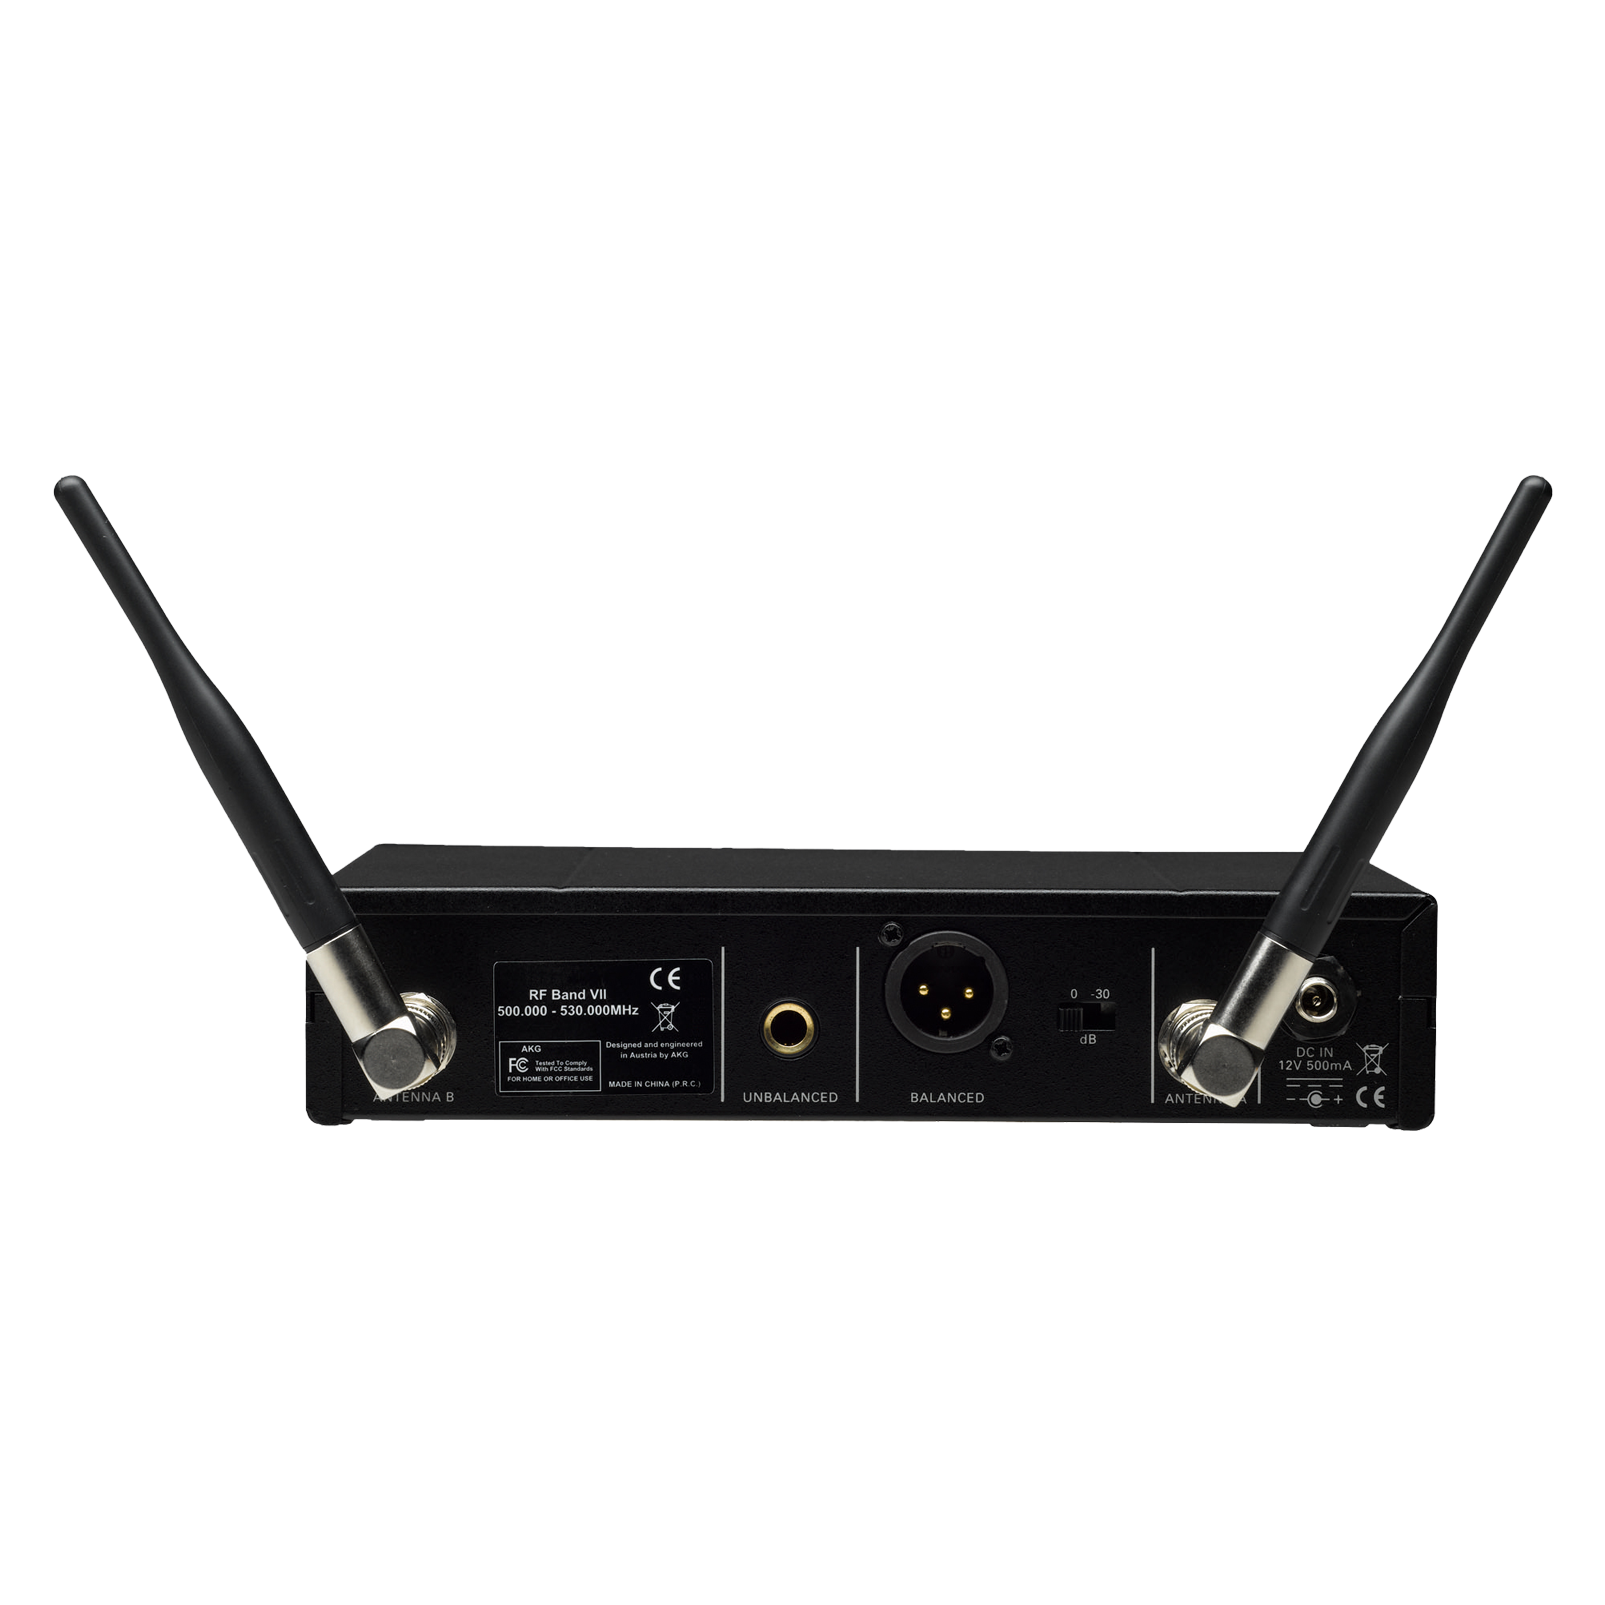 SR470 Band-8 (B-Stock) - Black - Professional wireless stationary receiver - Back